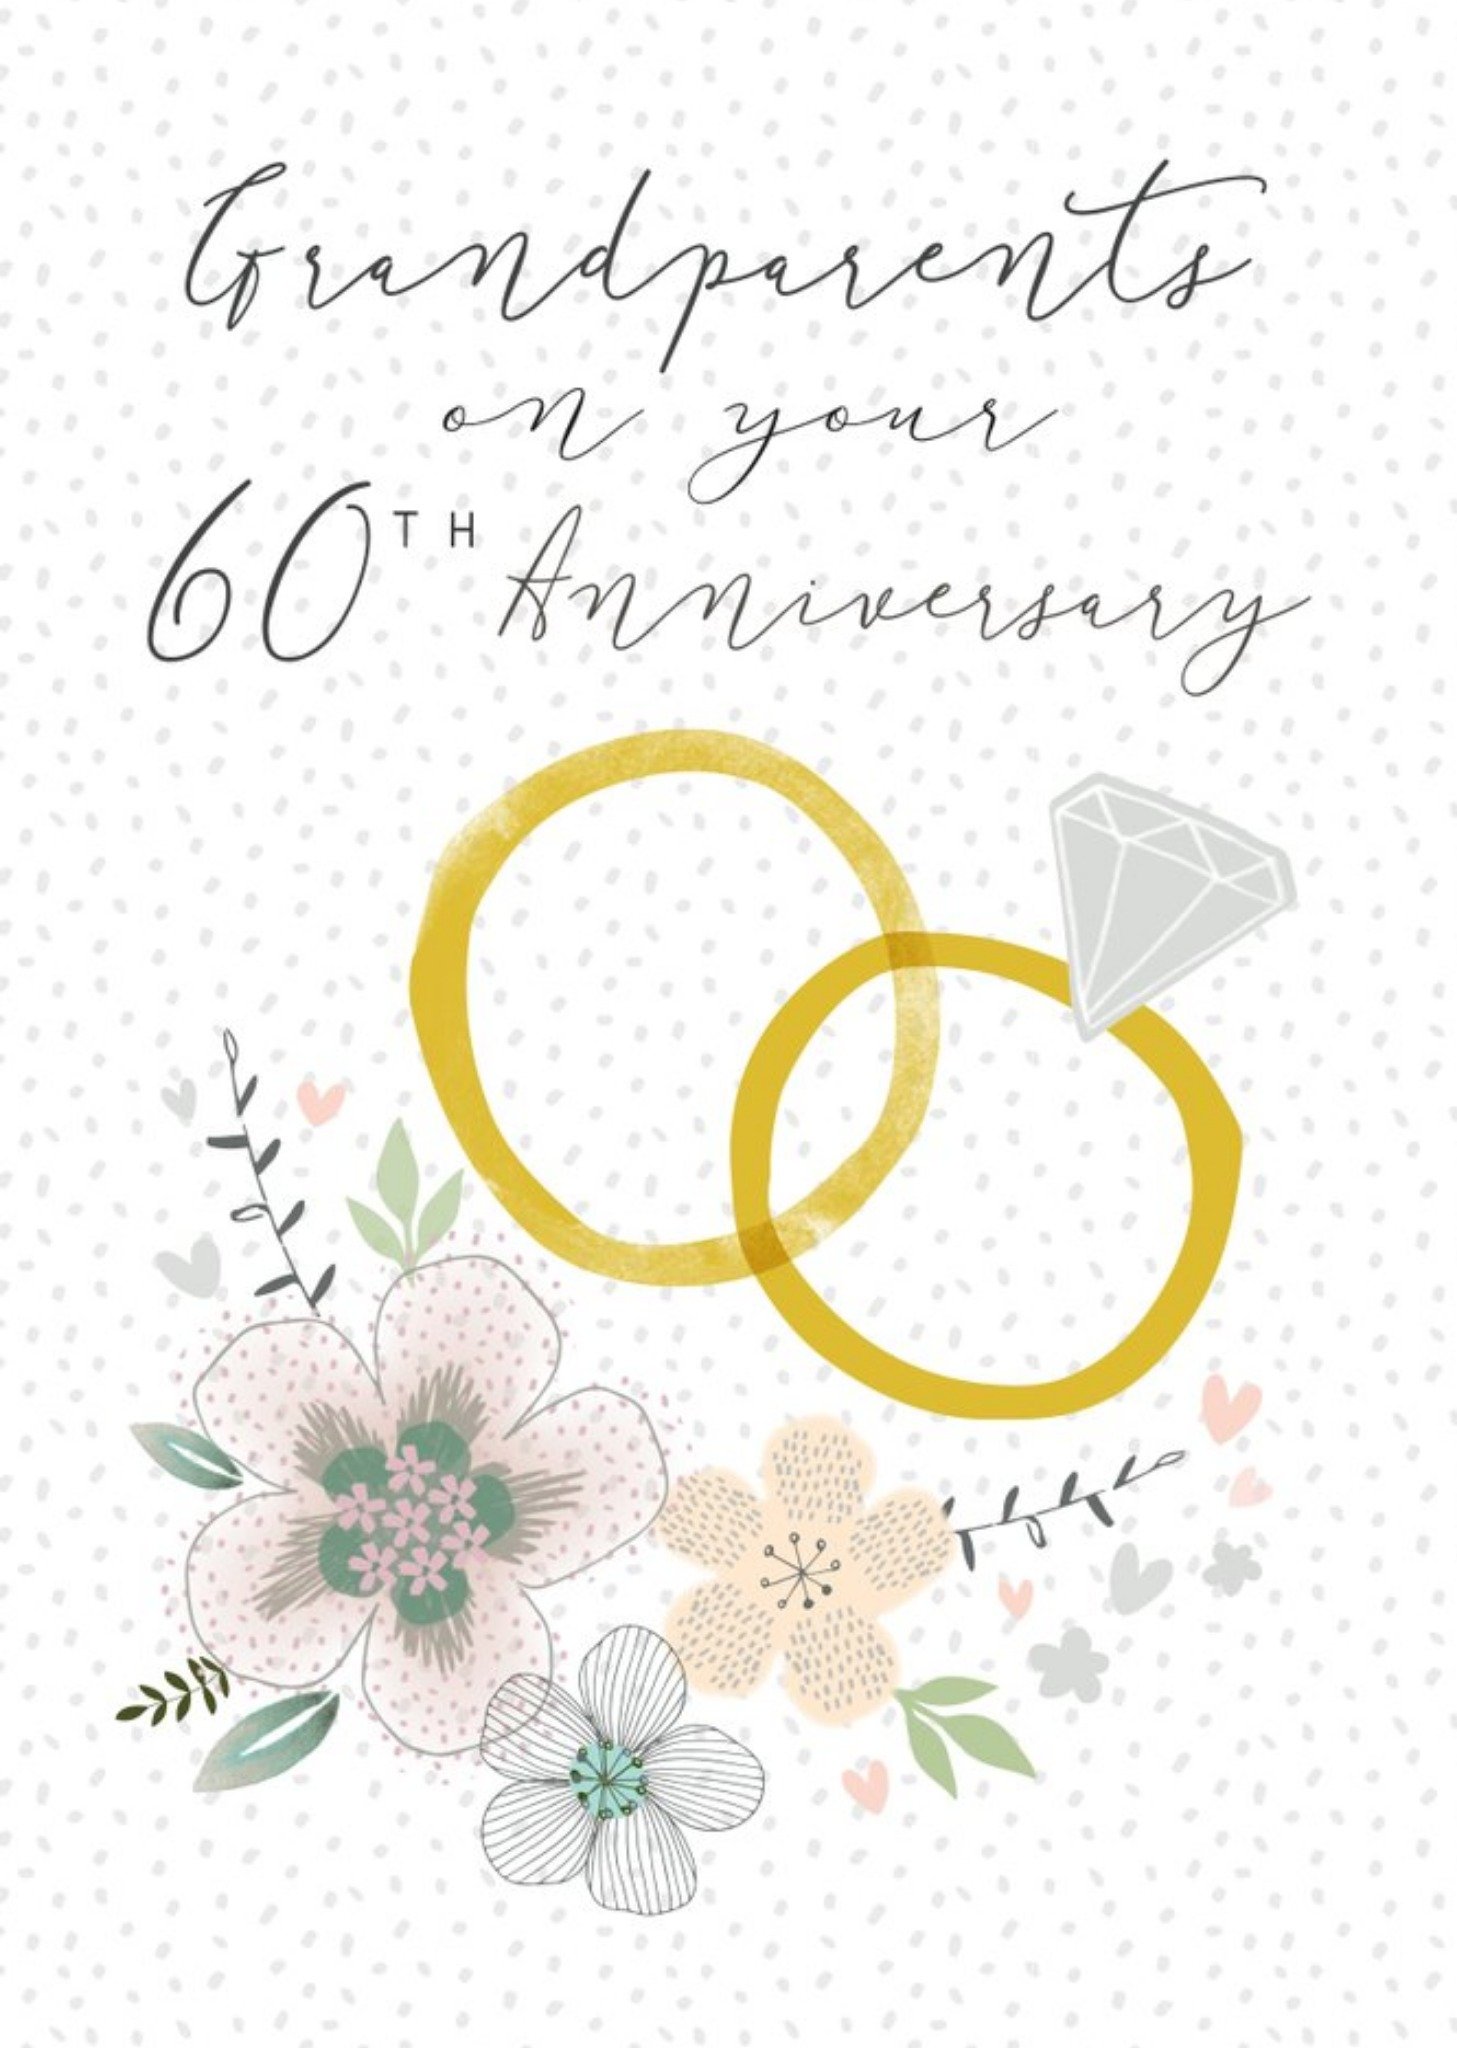 Moonpig Laura Darrington Illustrated Wedding Rings Grandparents 60th Anniversary Card Ecard